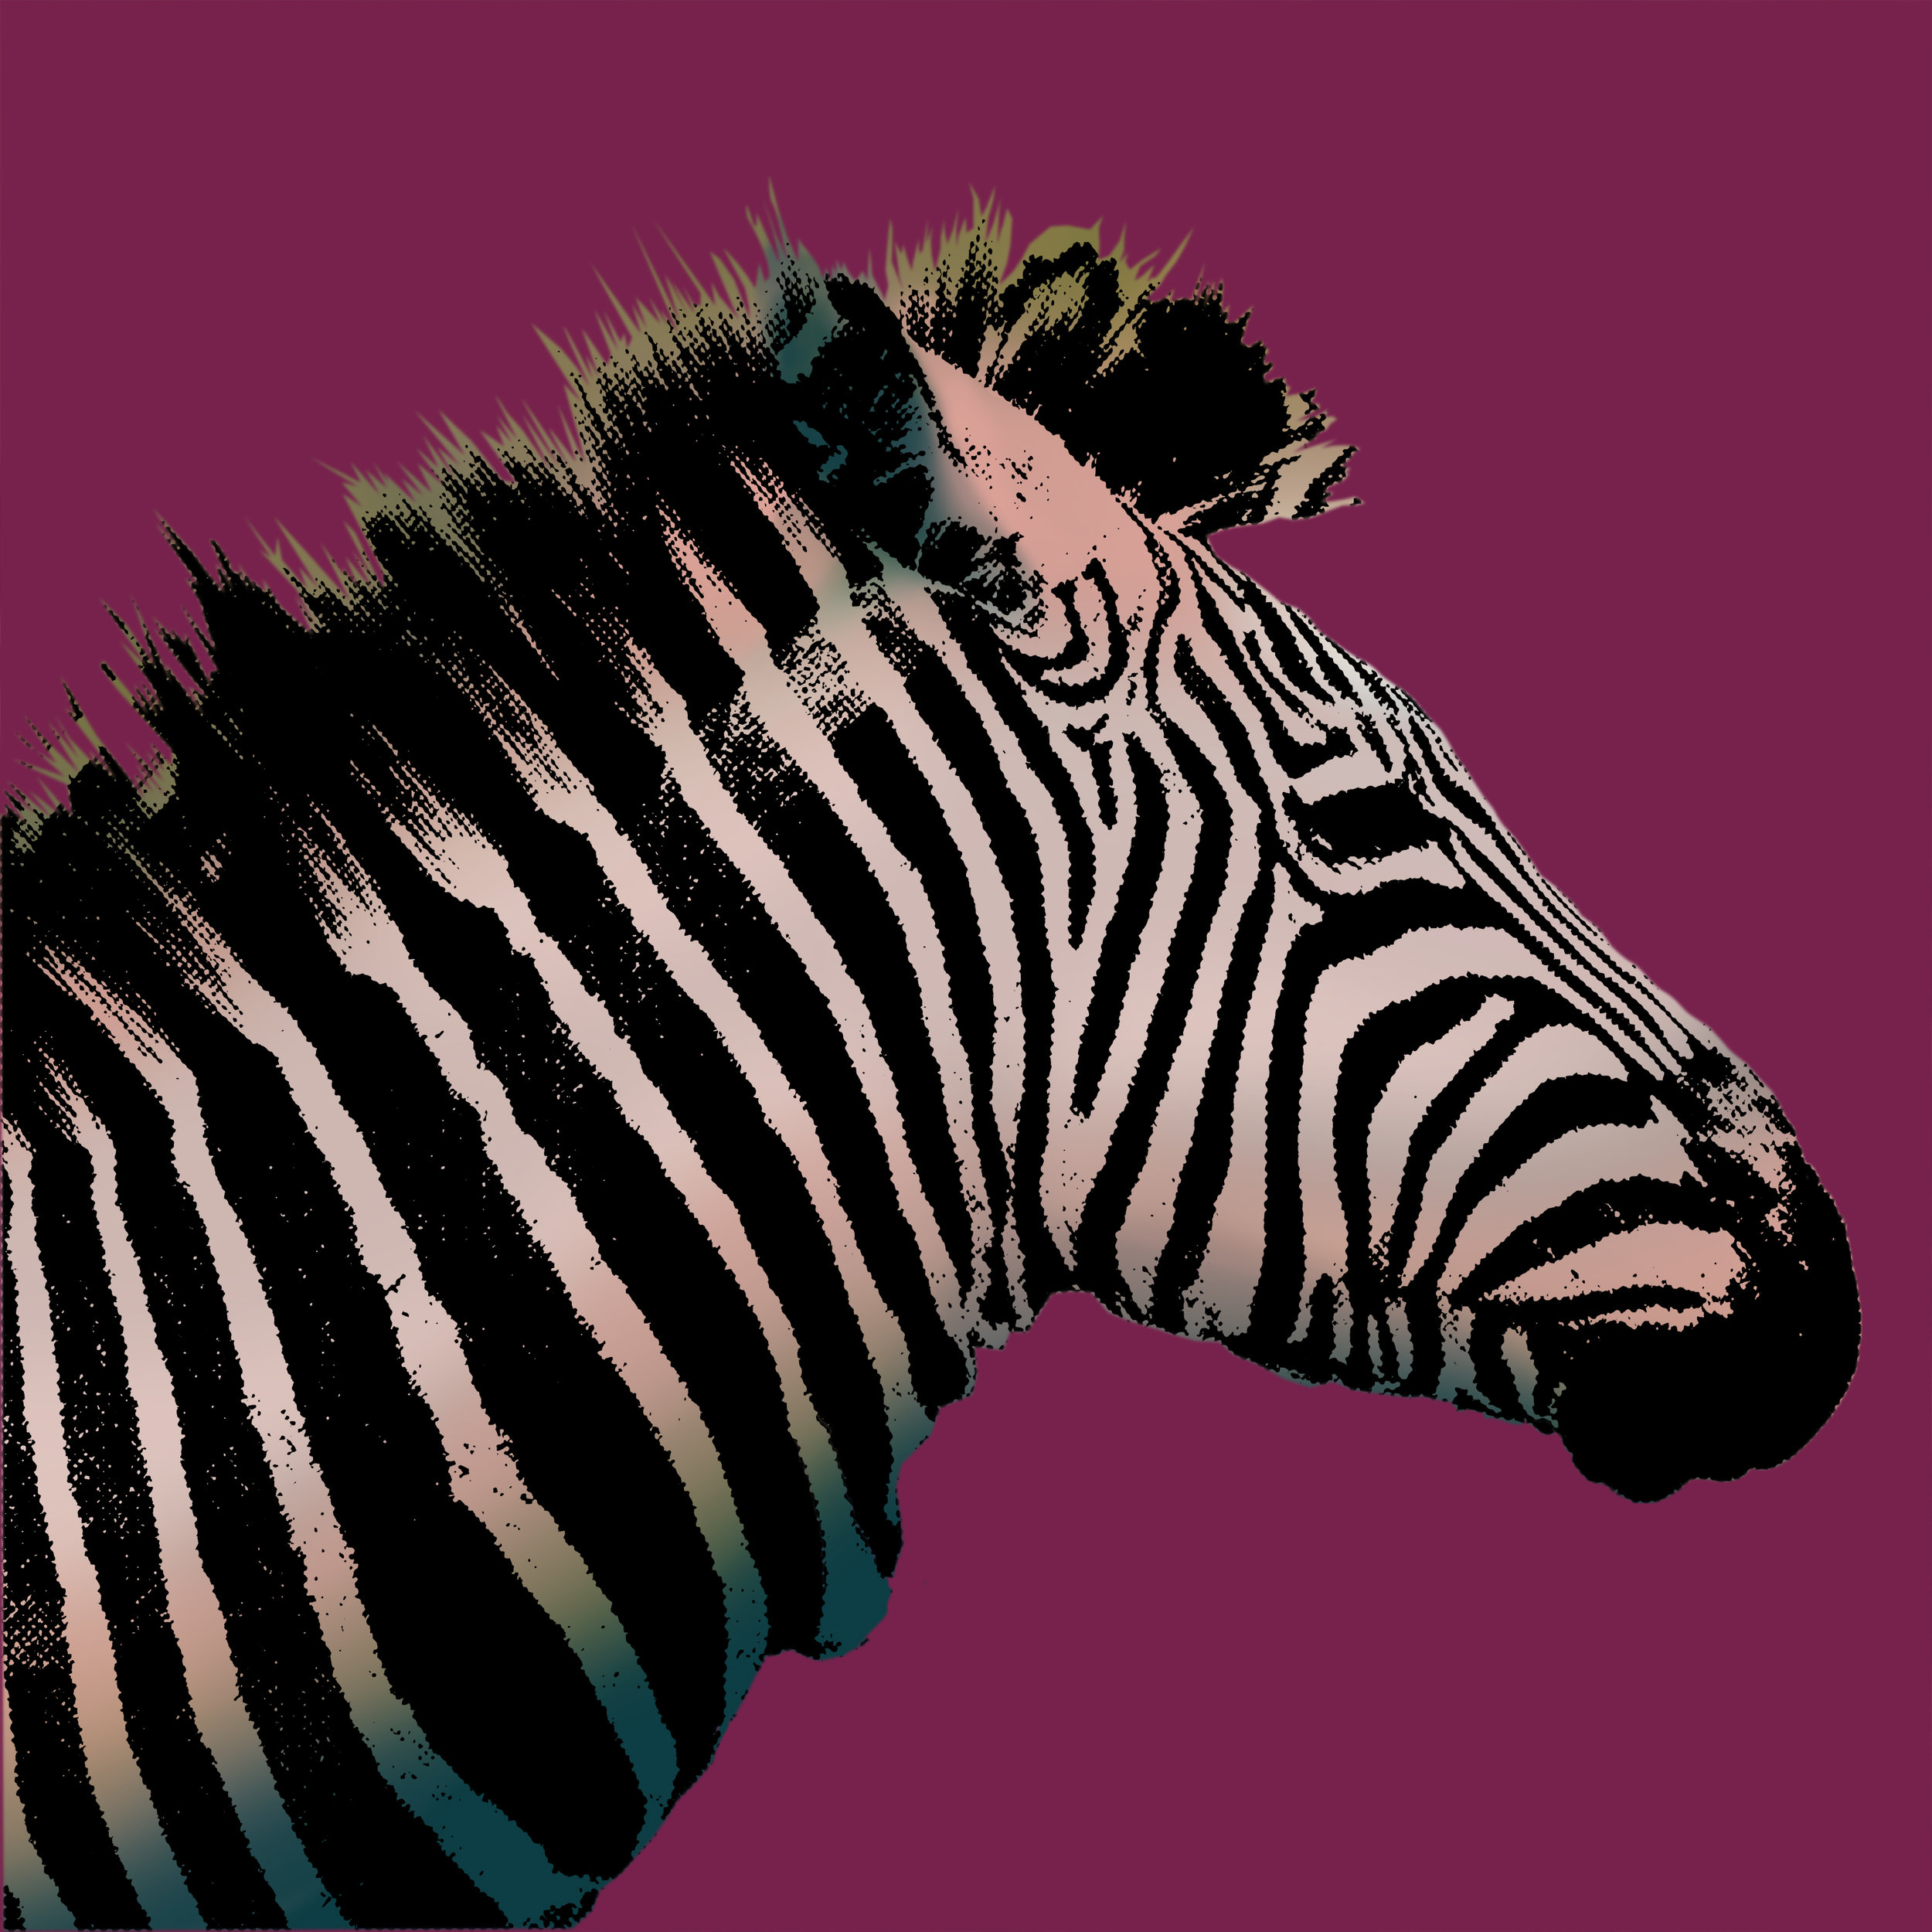 Zebra_PopArt.jpg